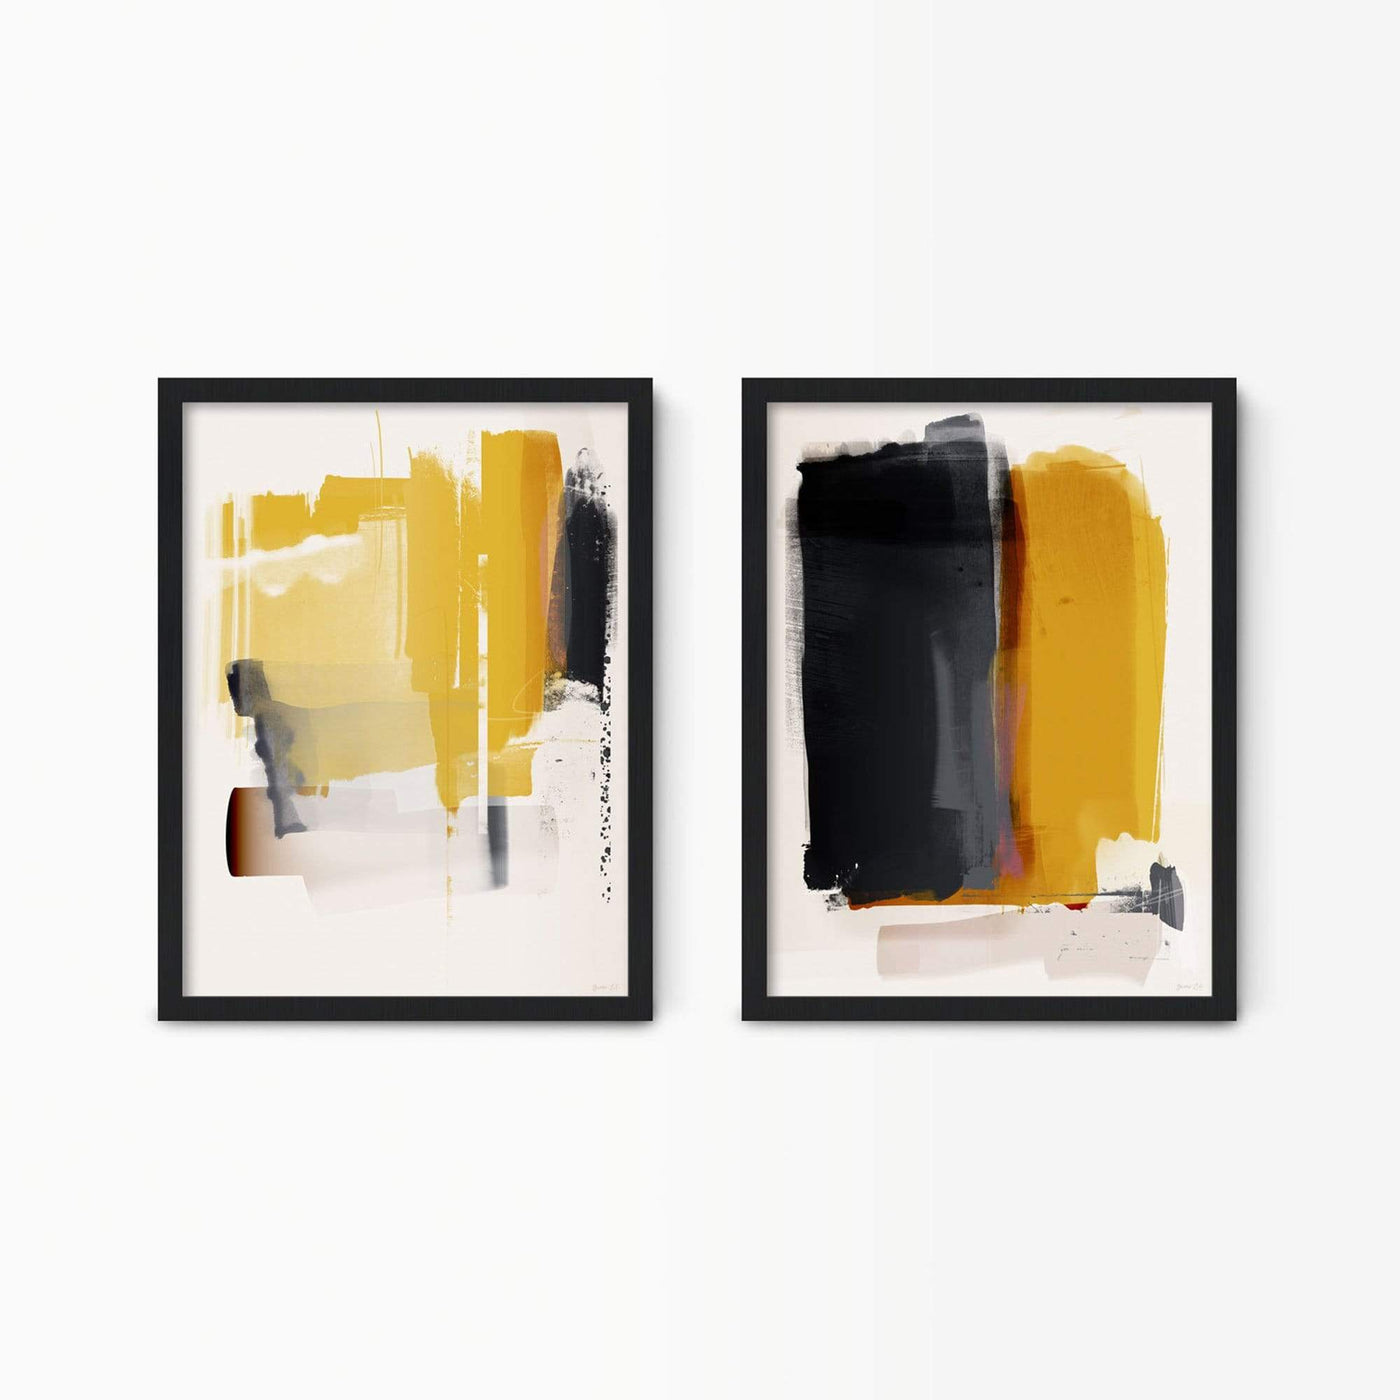 Green Lili 30x40cm (12x16") / Black Frame Mustard Yellow Abstract Wall Art Set